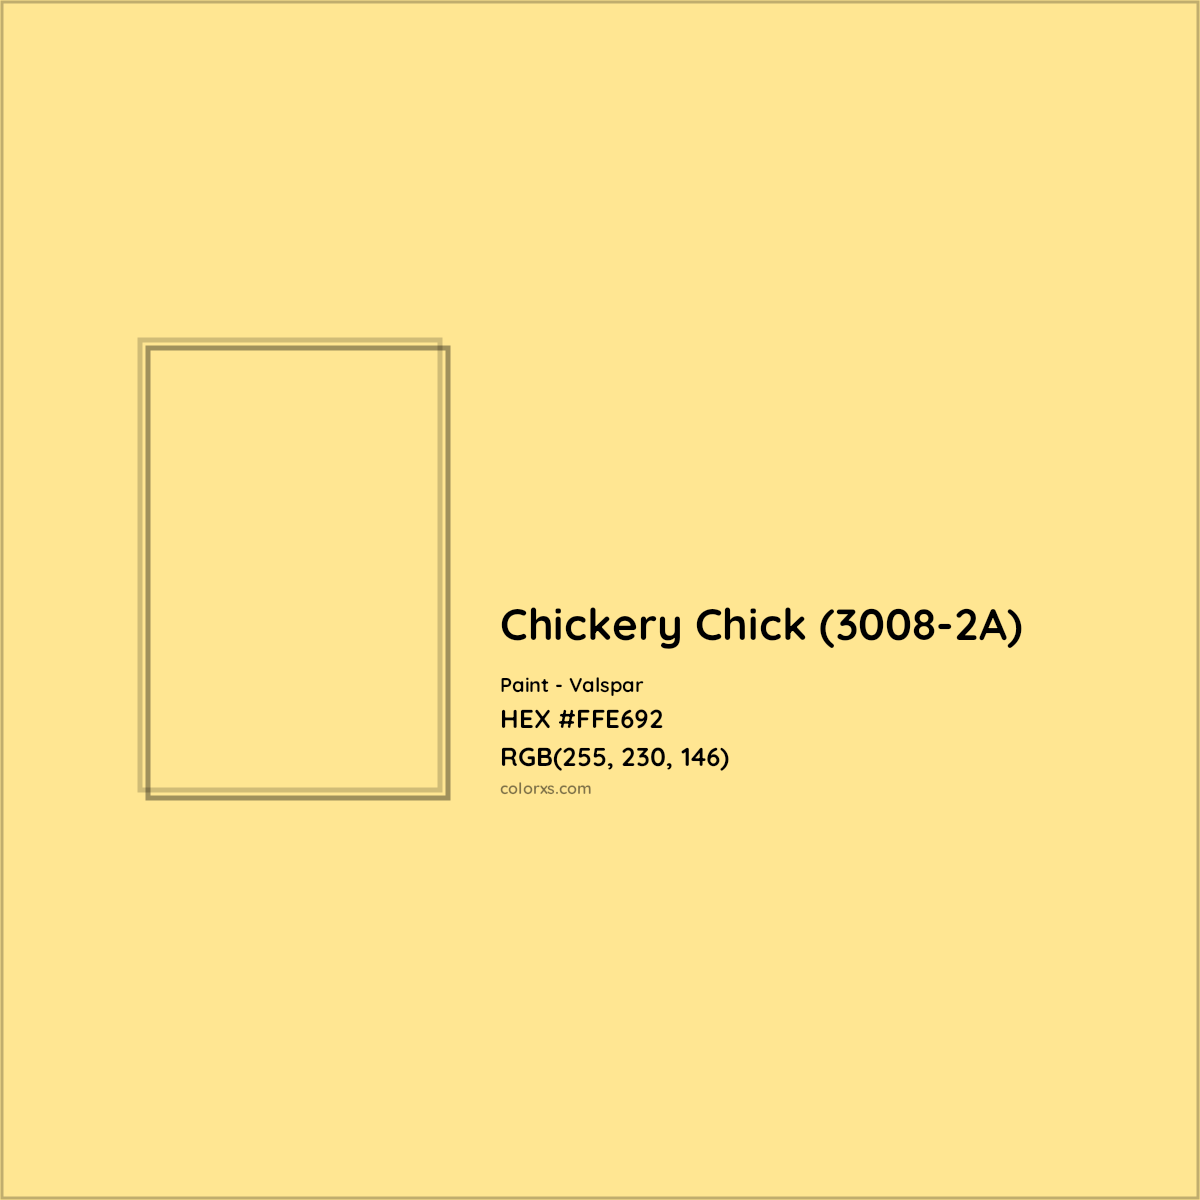 HEX #FFE692 Chickery Chick (3008-2A) Paint Valspar - Color Code